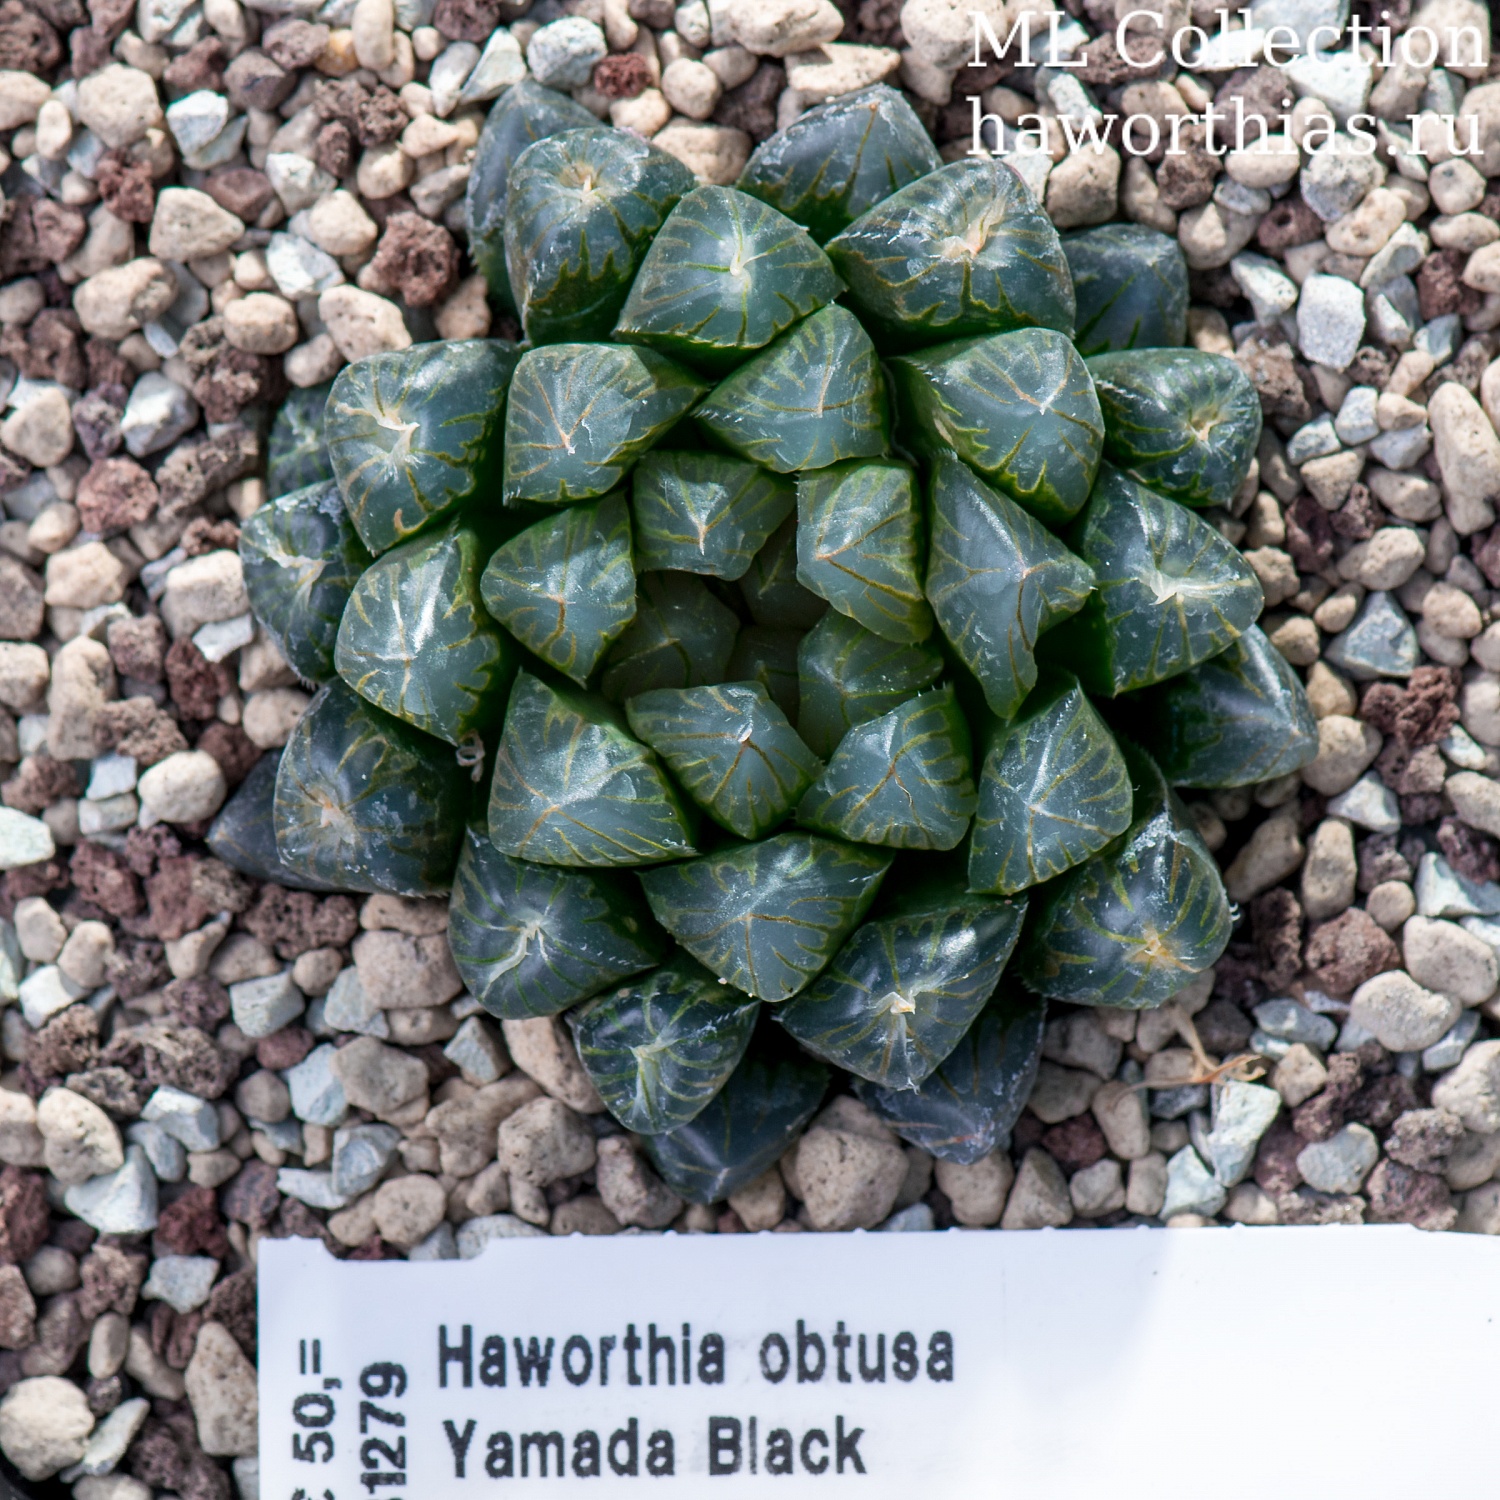 Haworthia obtusa